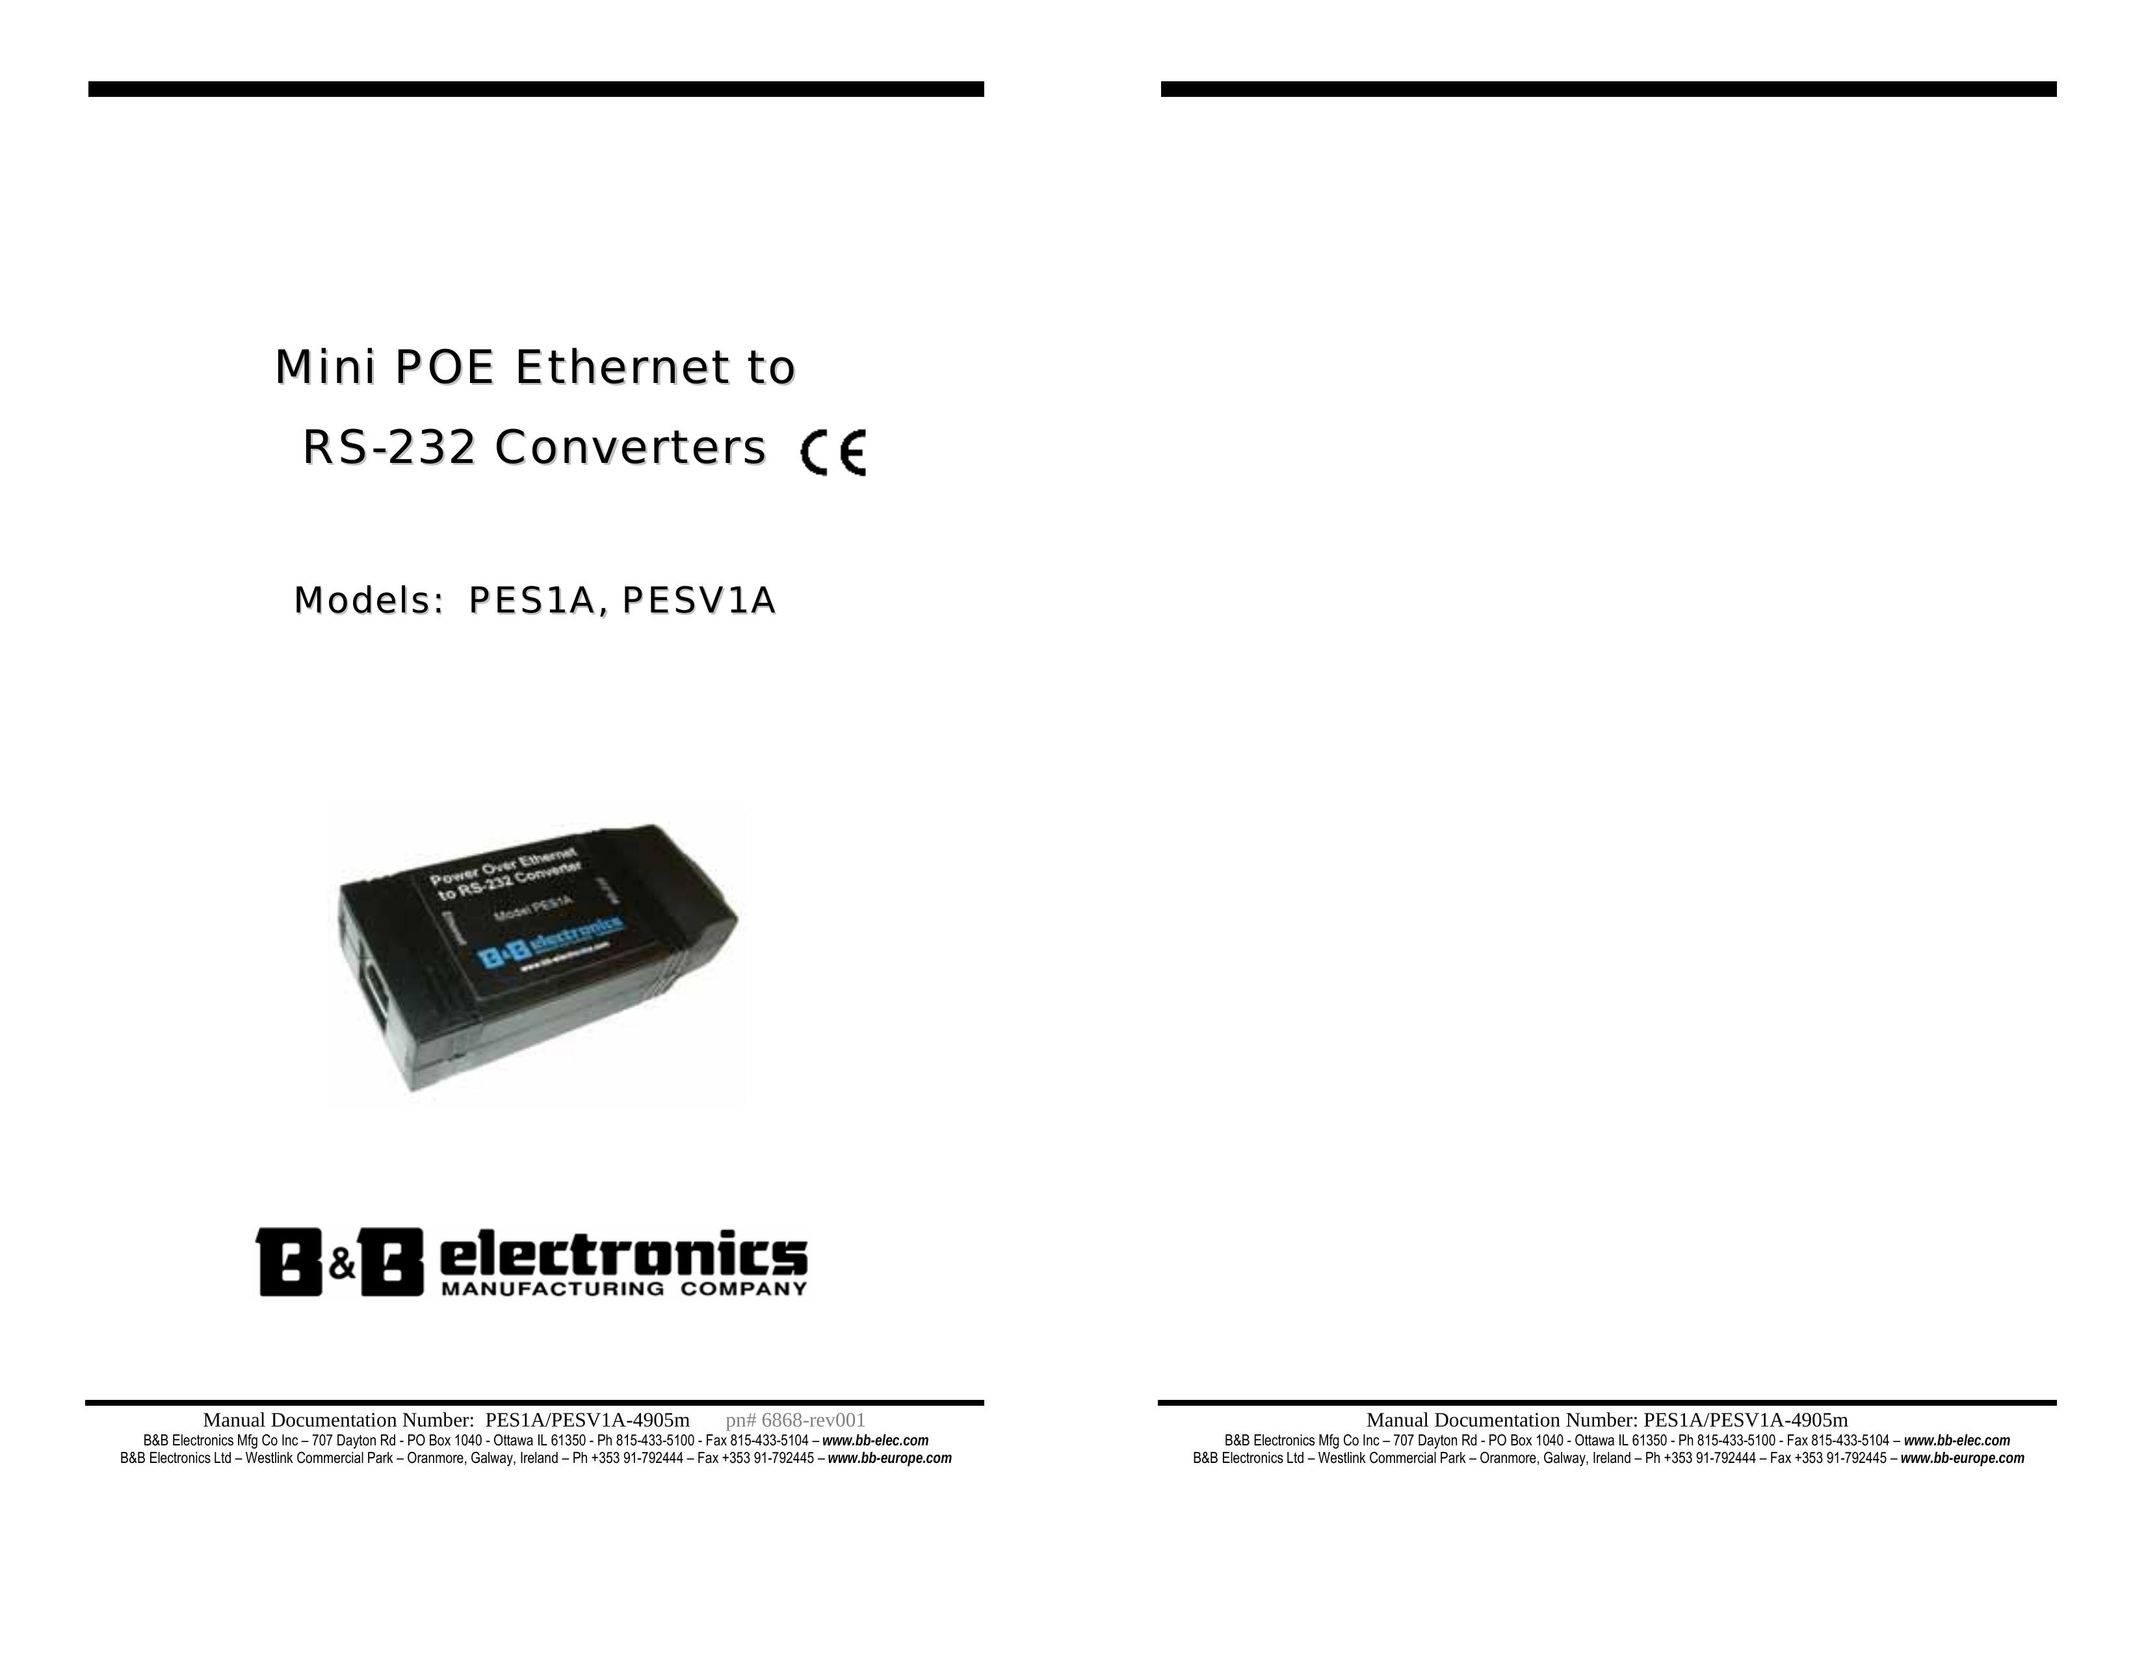 B&B Electronics PES1A Computer Hardware User Manual